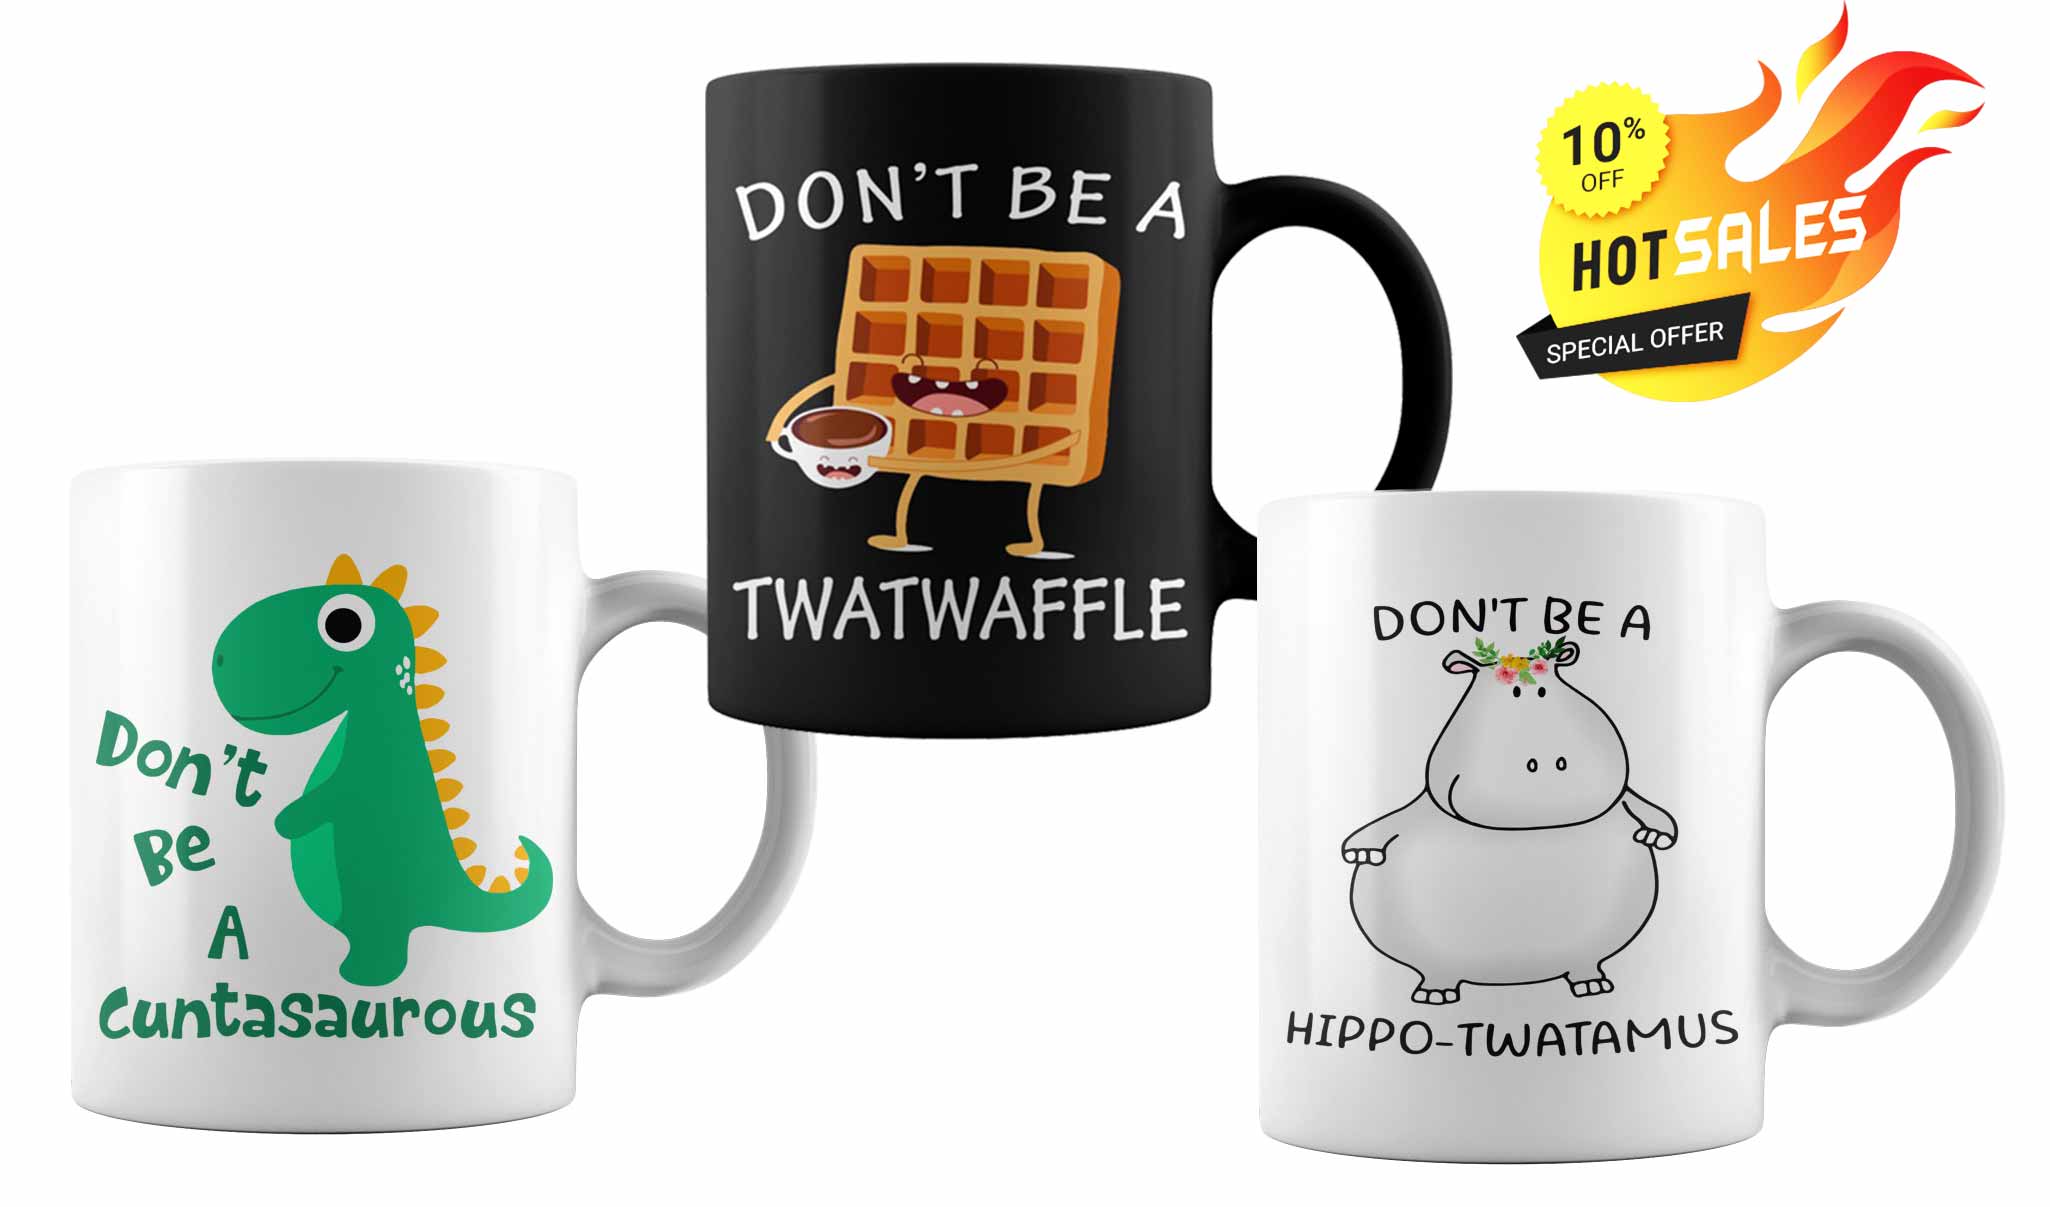 Don't Be A Cuntasaurous, A Hippo-Twatamus, A Twatwaffle mug